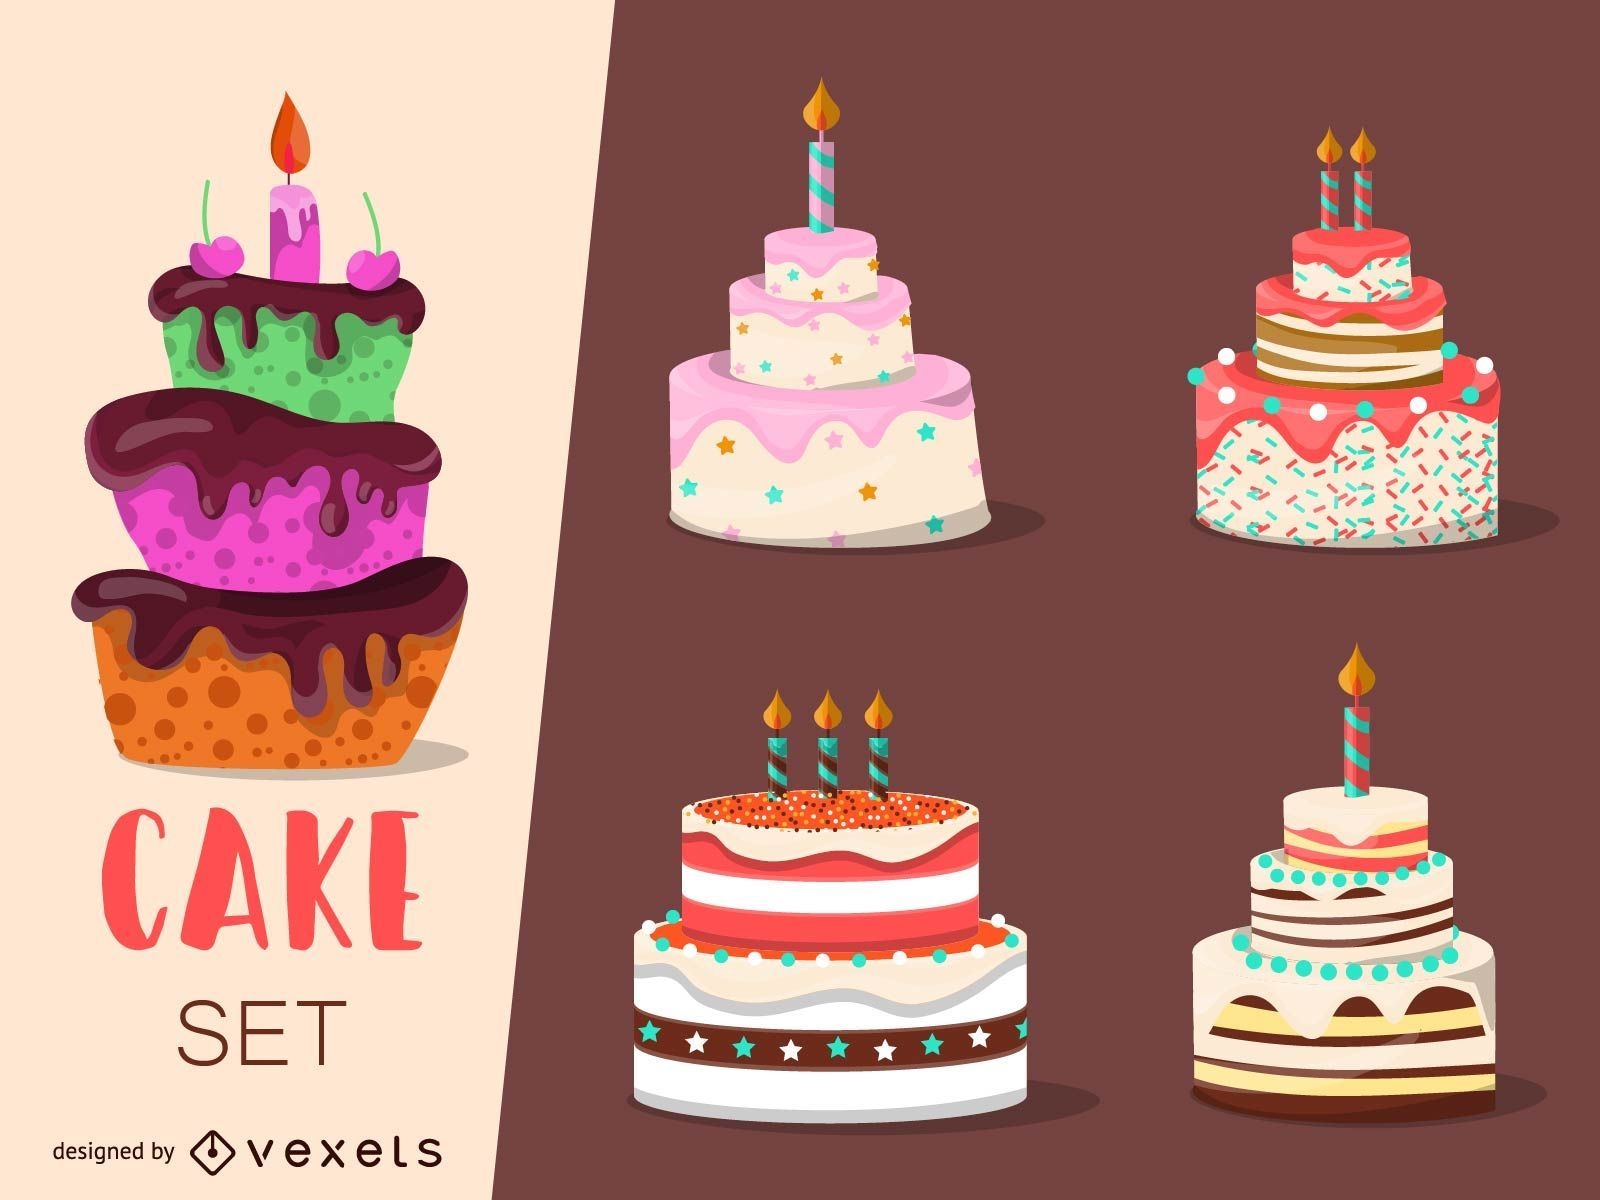 4 Cake illustrations set